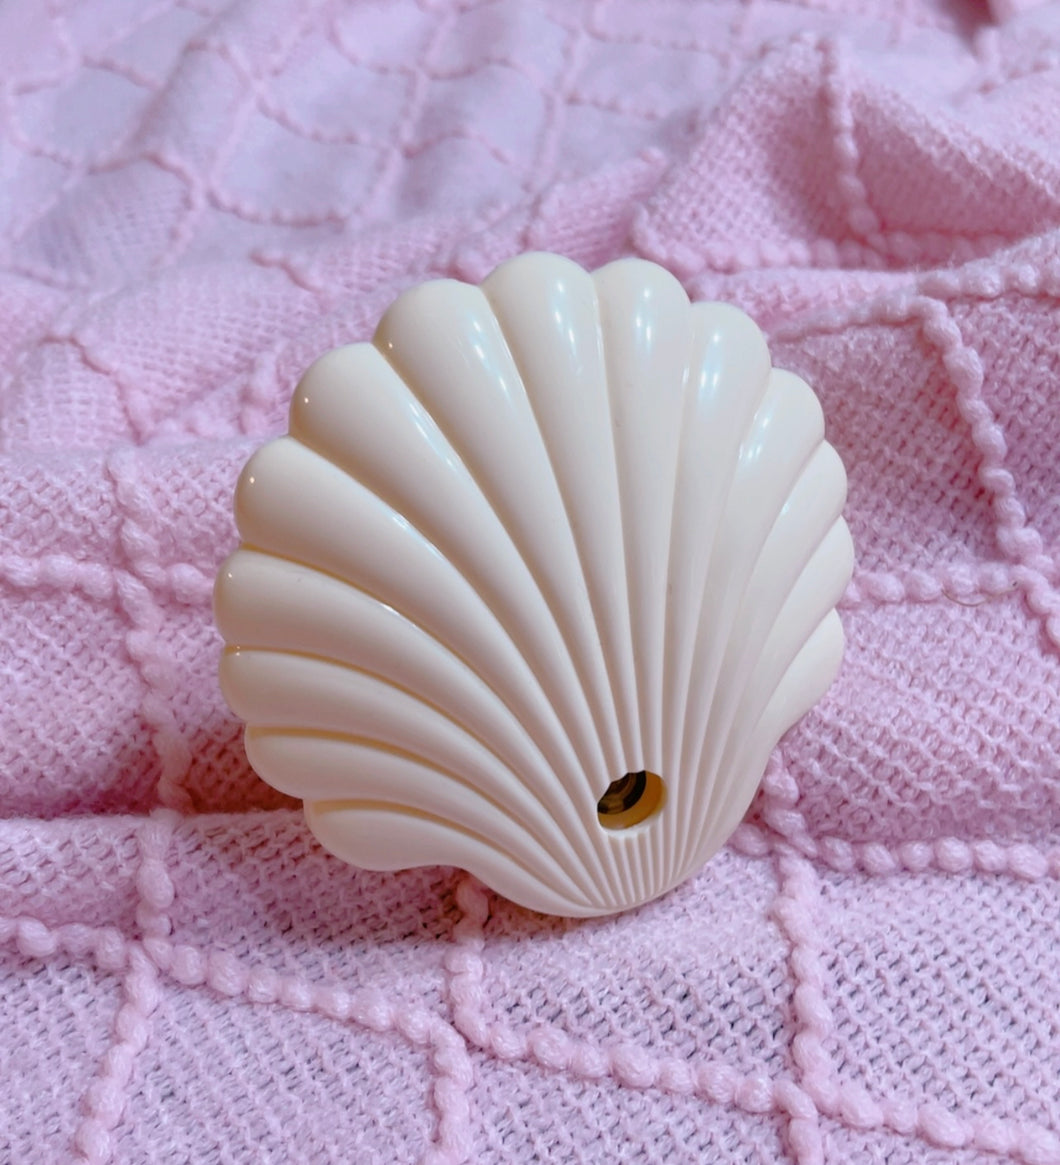 Clam Shell vintage plastic nightlight (USA plug) 1980s collectible